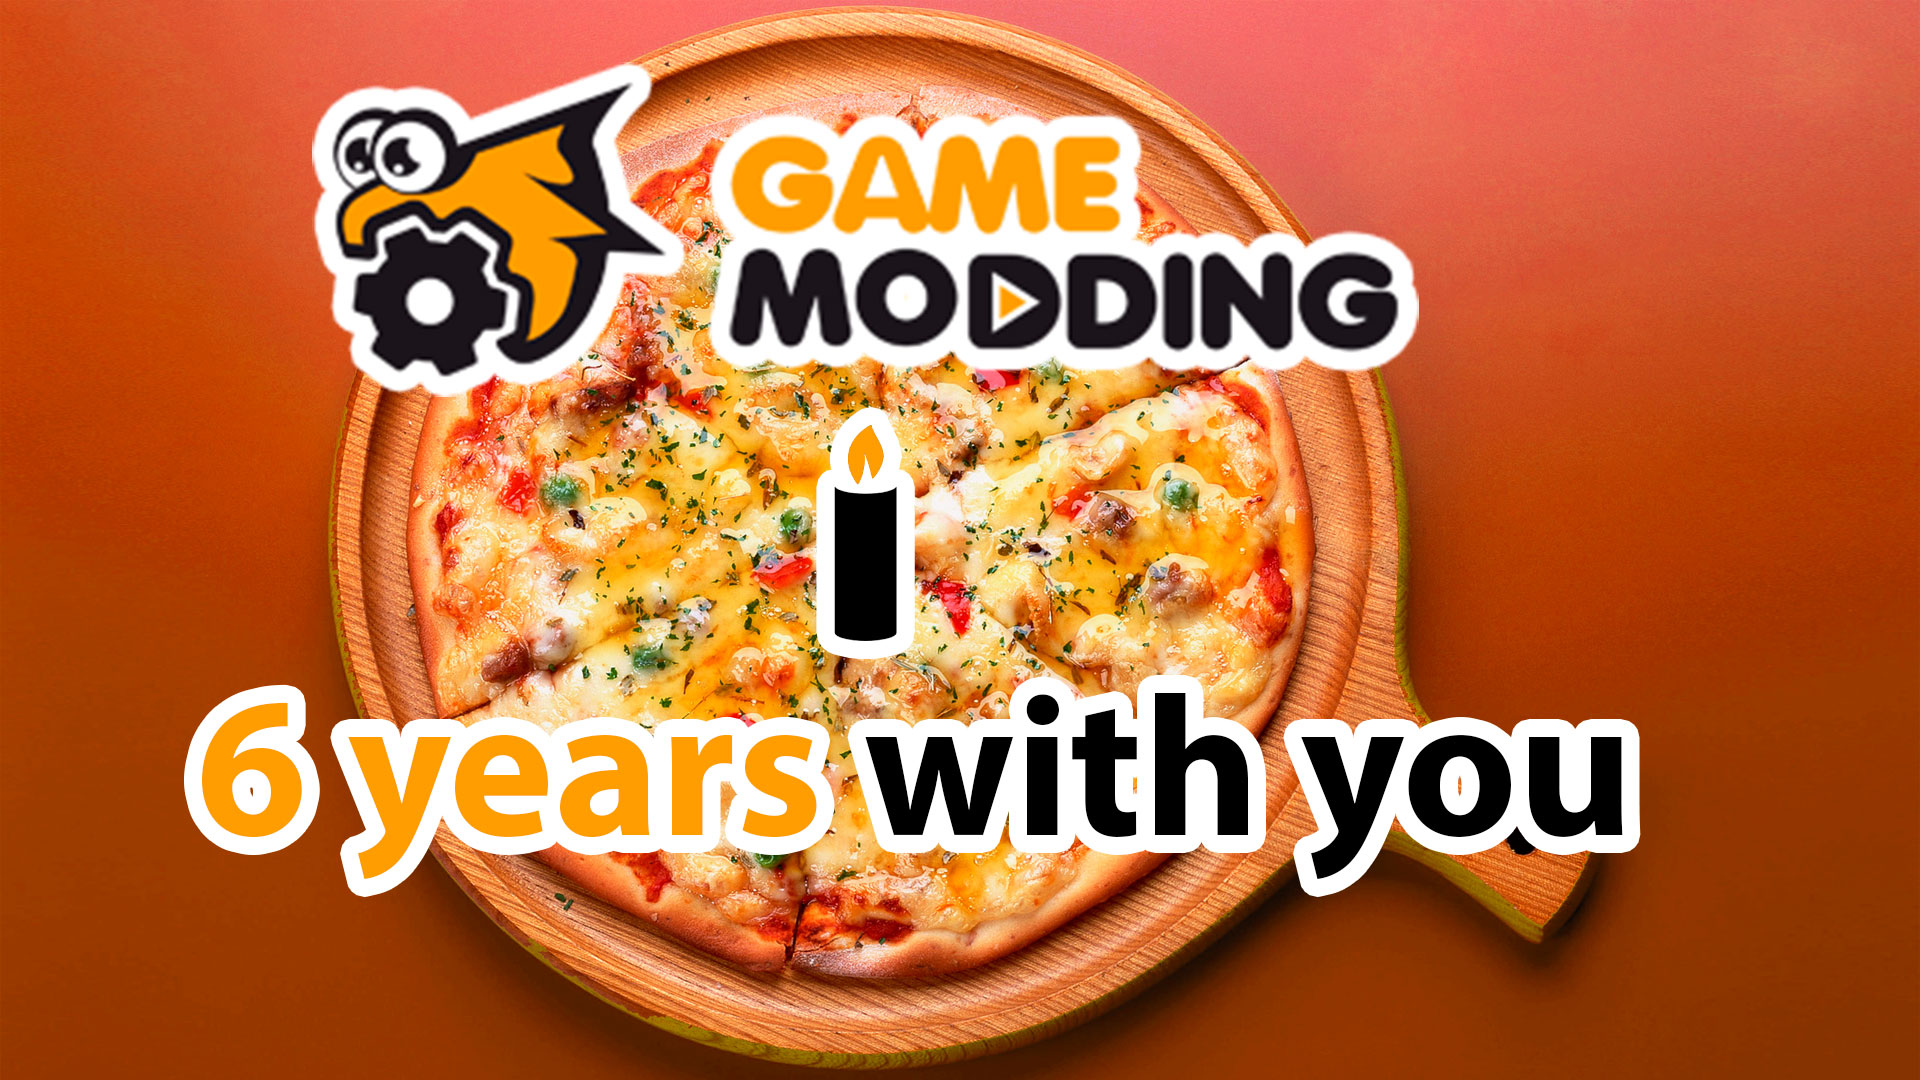 GameModding celebra 6 años!